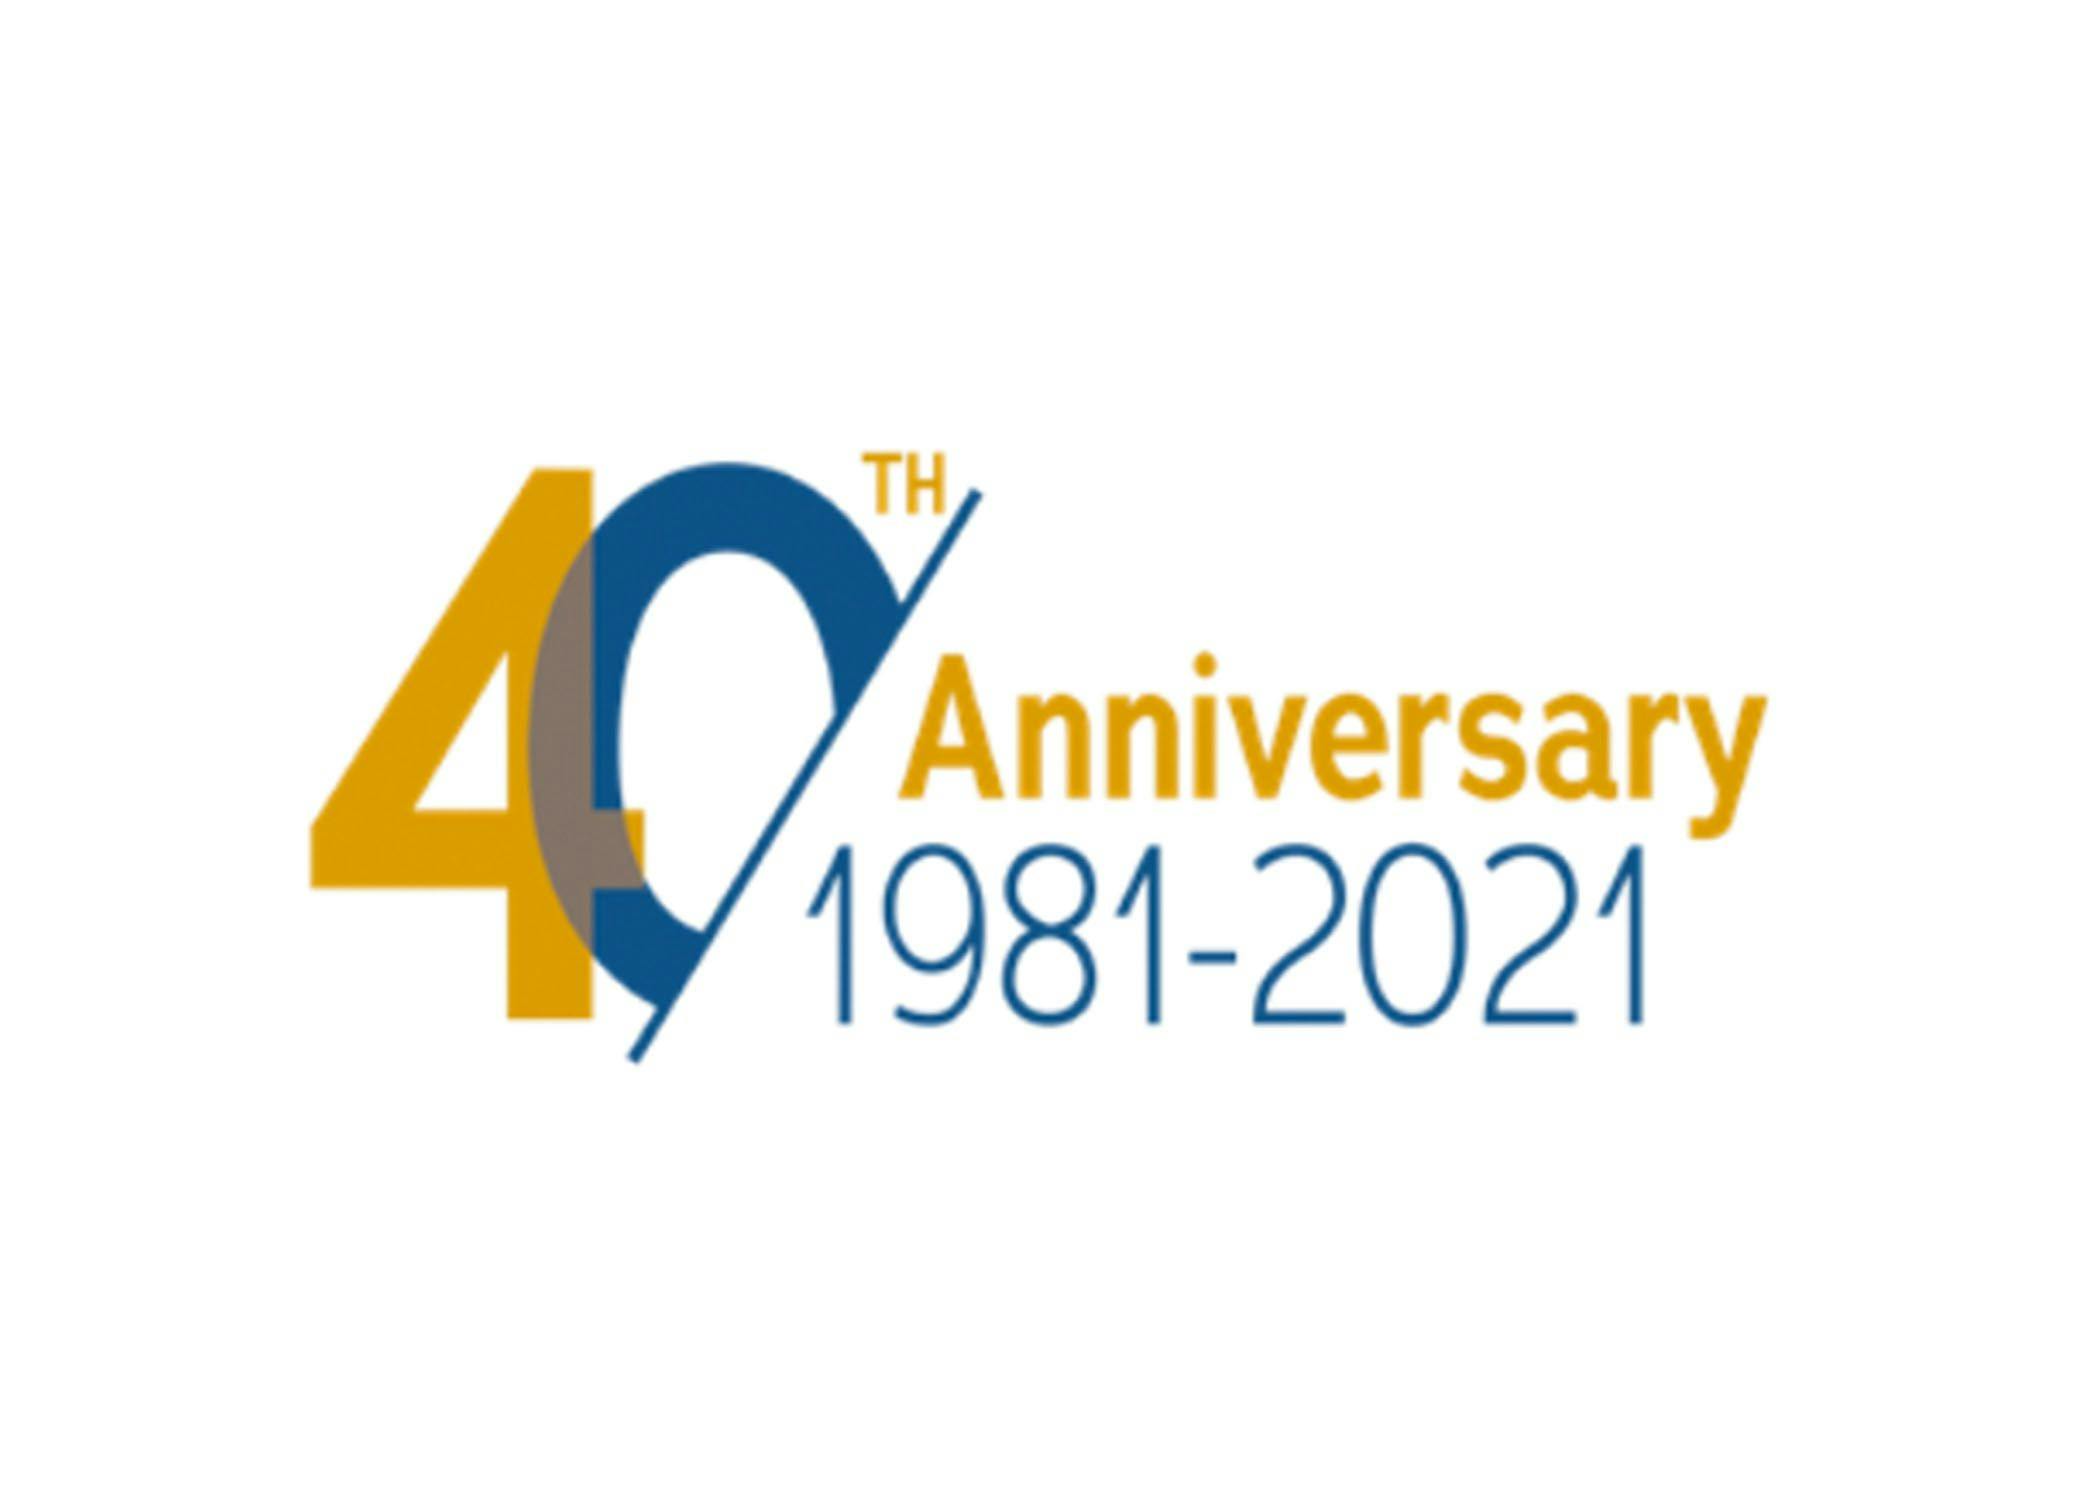 Pharm Exec at 40 (2003-2006)